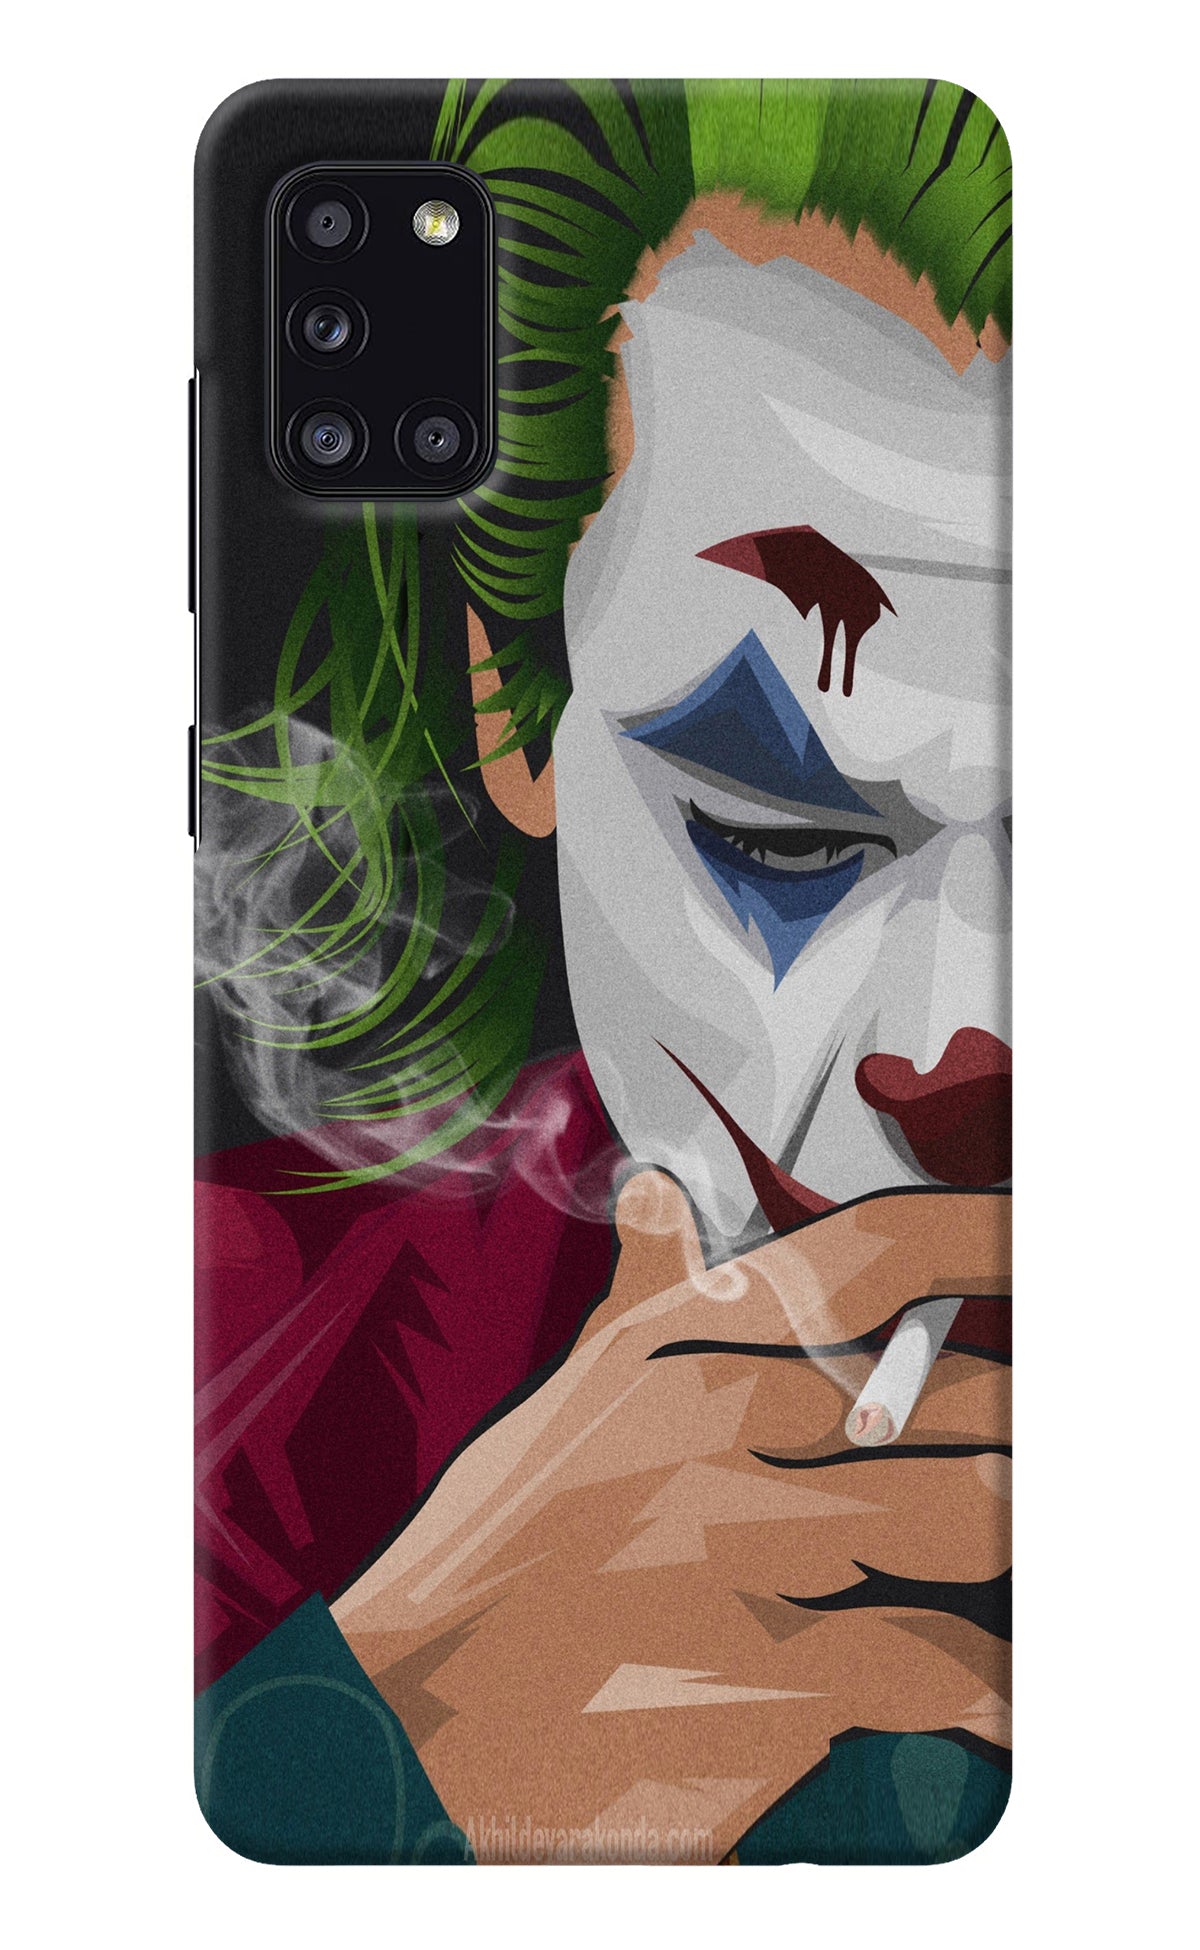 Joker Smoking Samsung A31 Back Cover